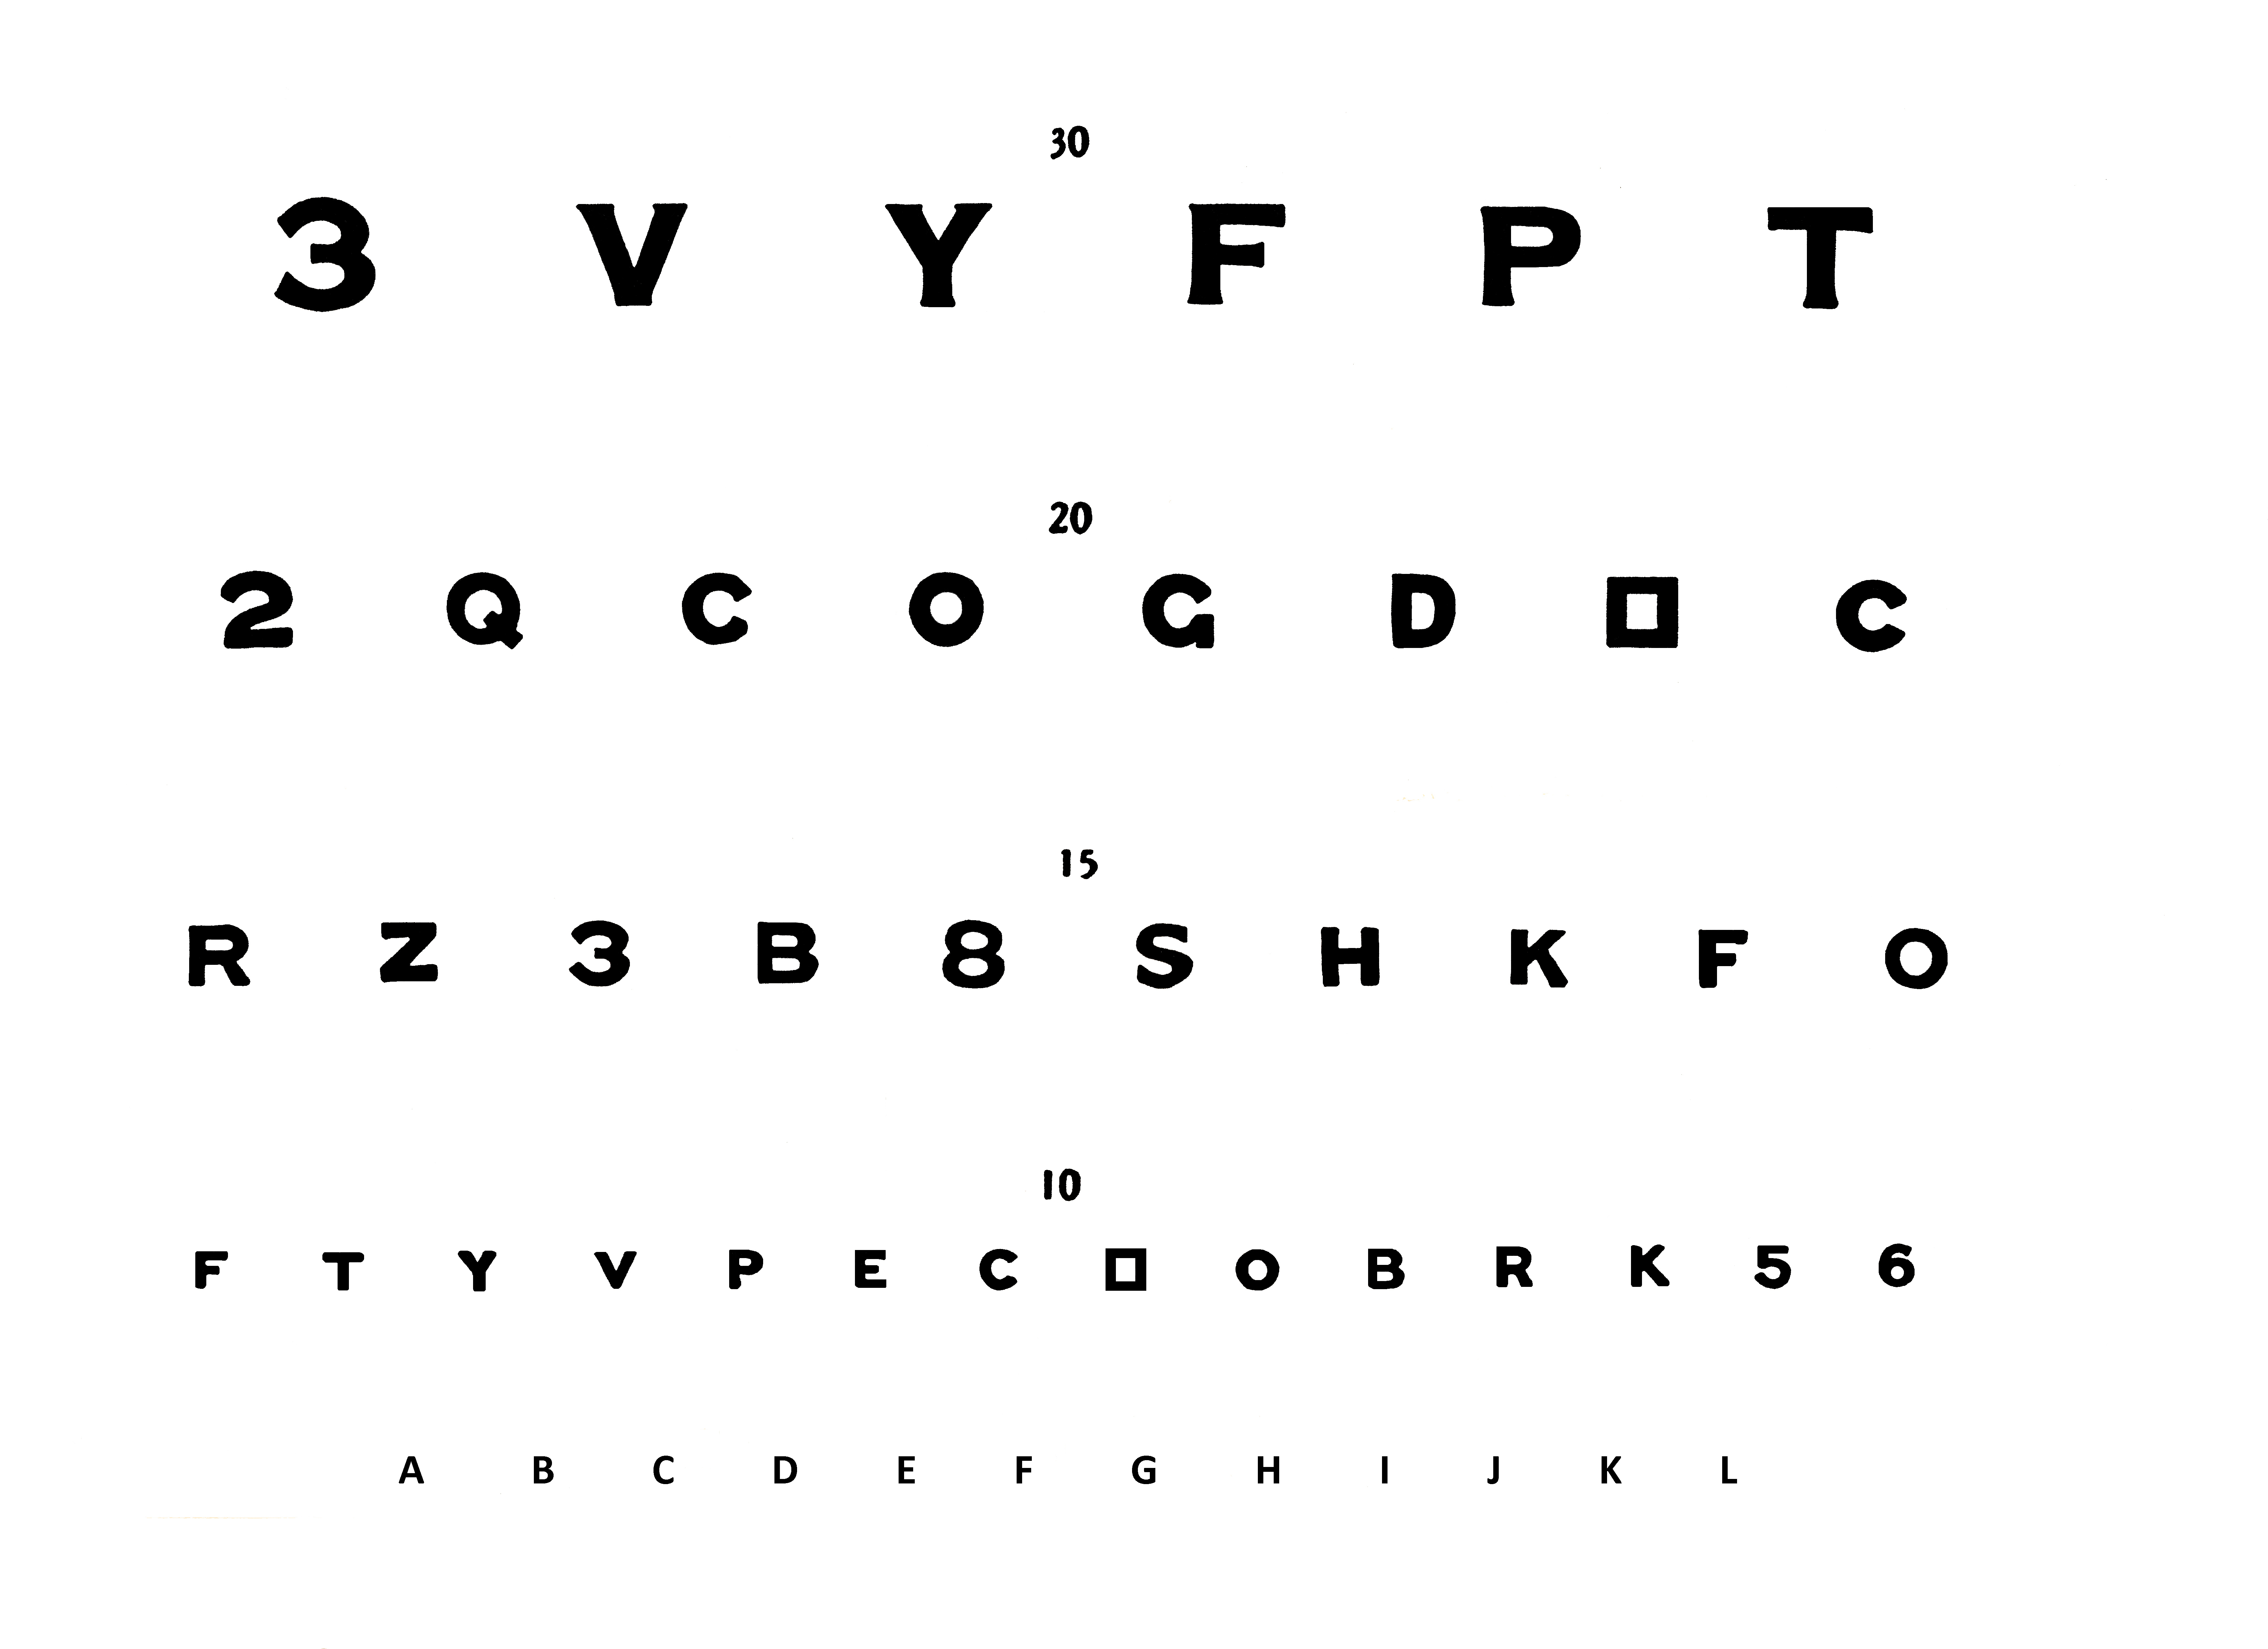 Sample Eye Test Chart